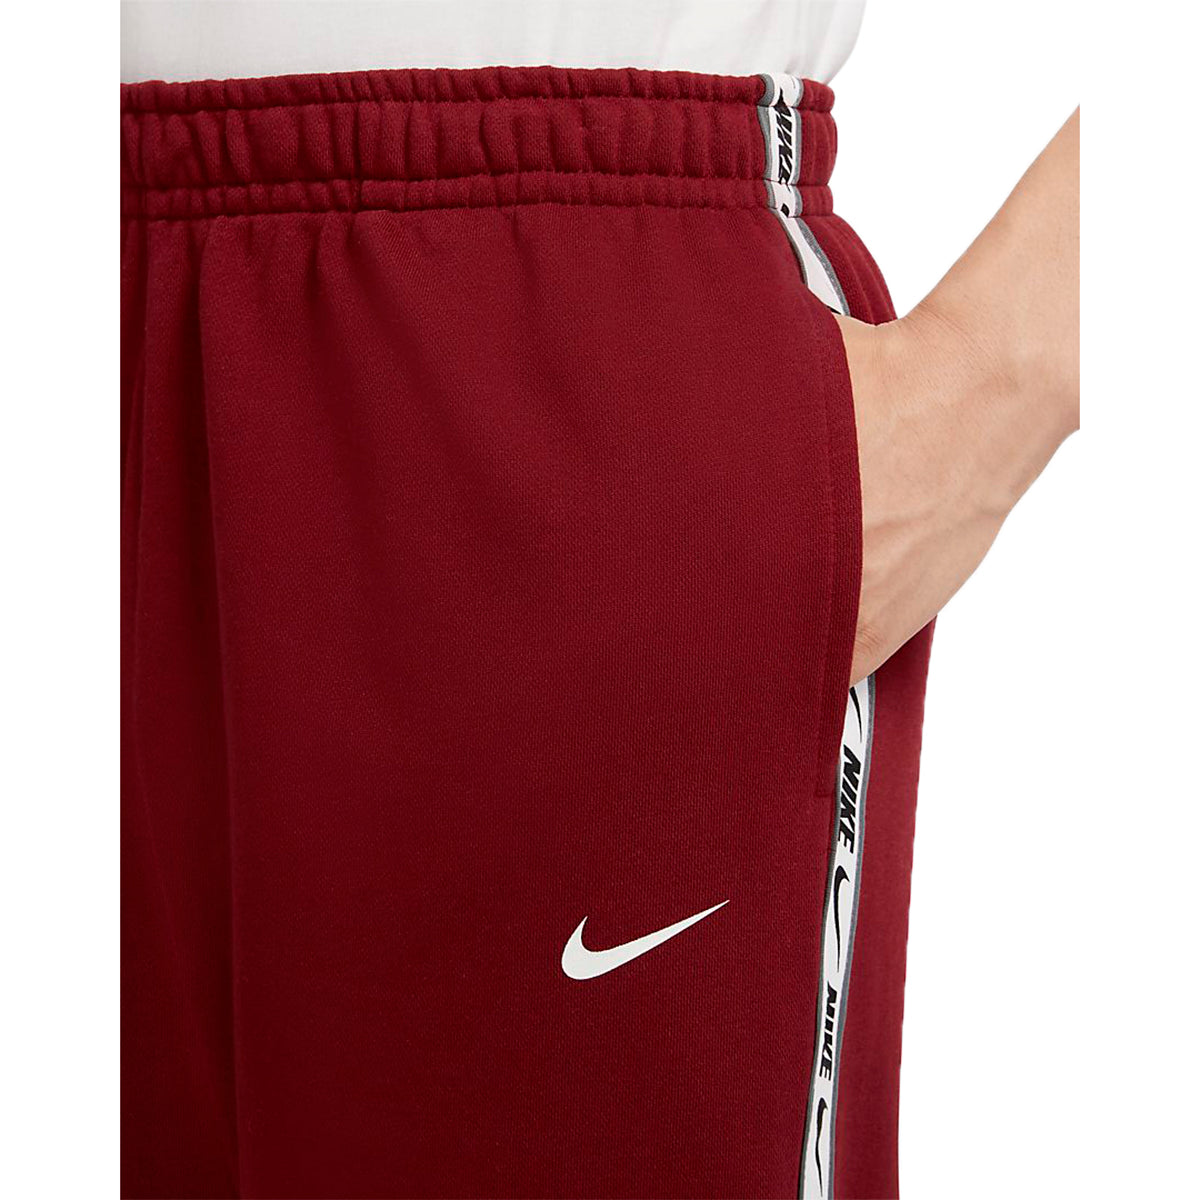 Nike Sportswear Shorts Mens Style : Cz7827